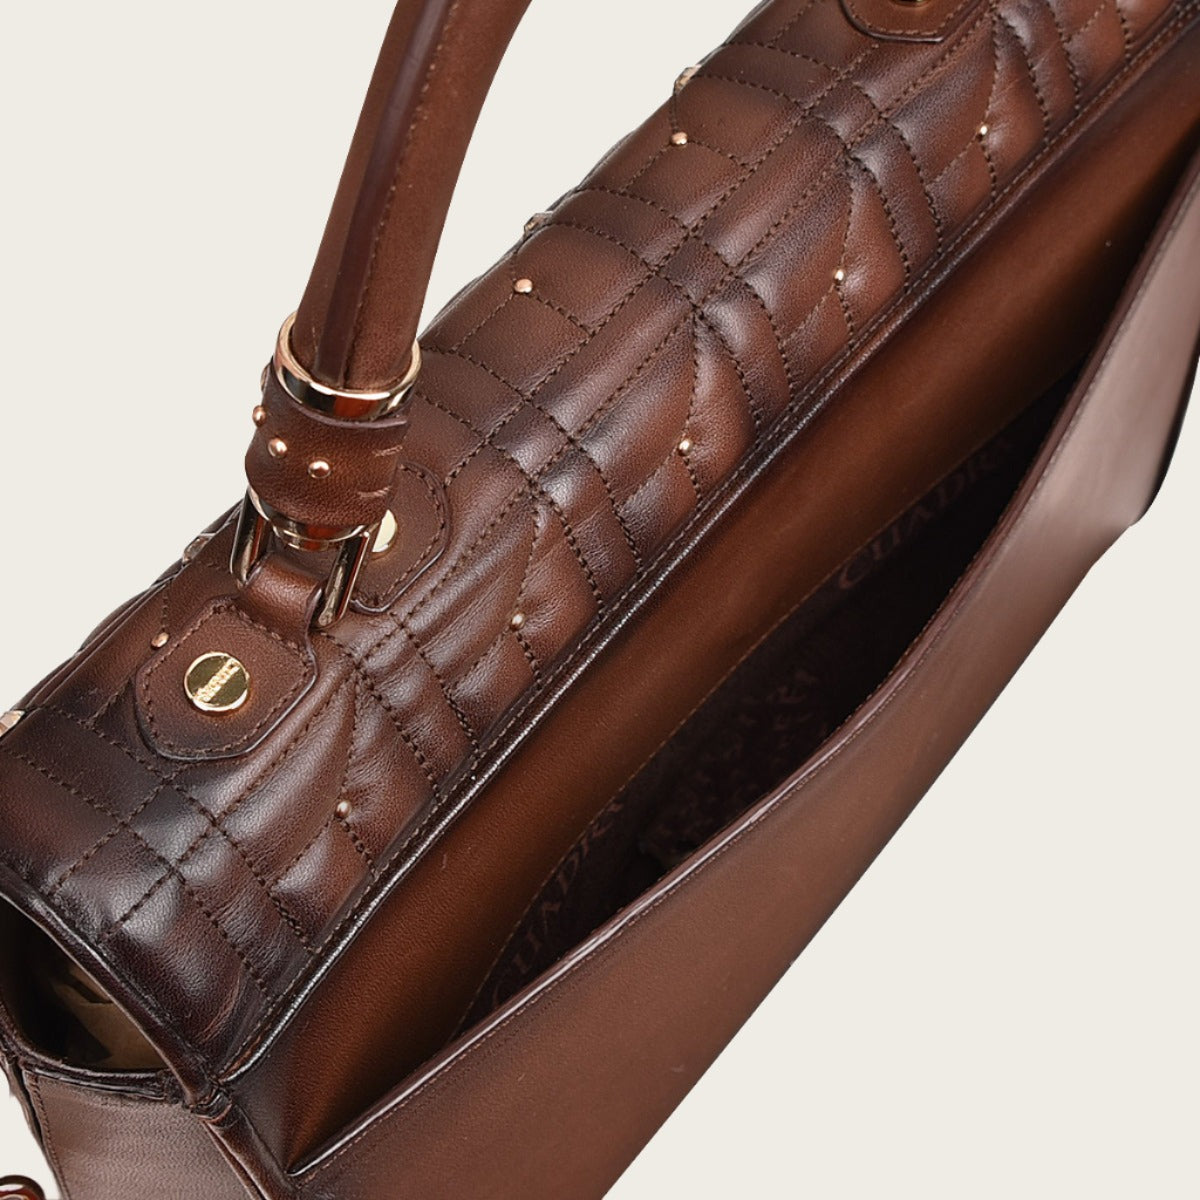 La Victoire Black Leather Bag  Leather fringe bag, Guess purses